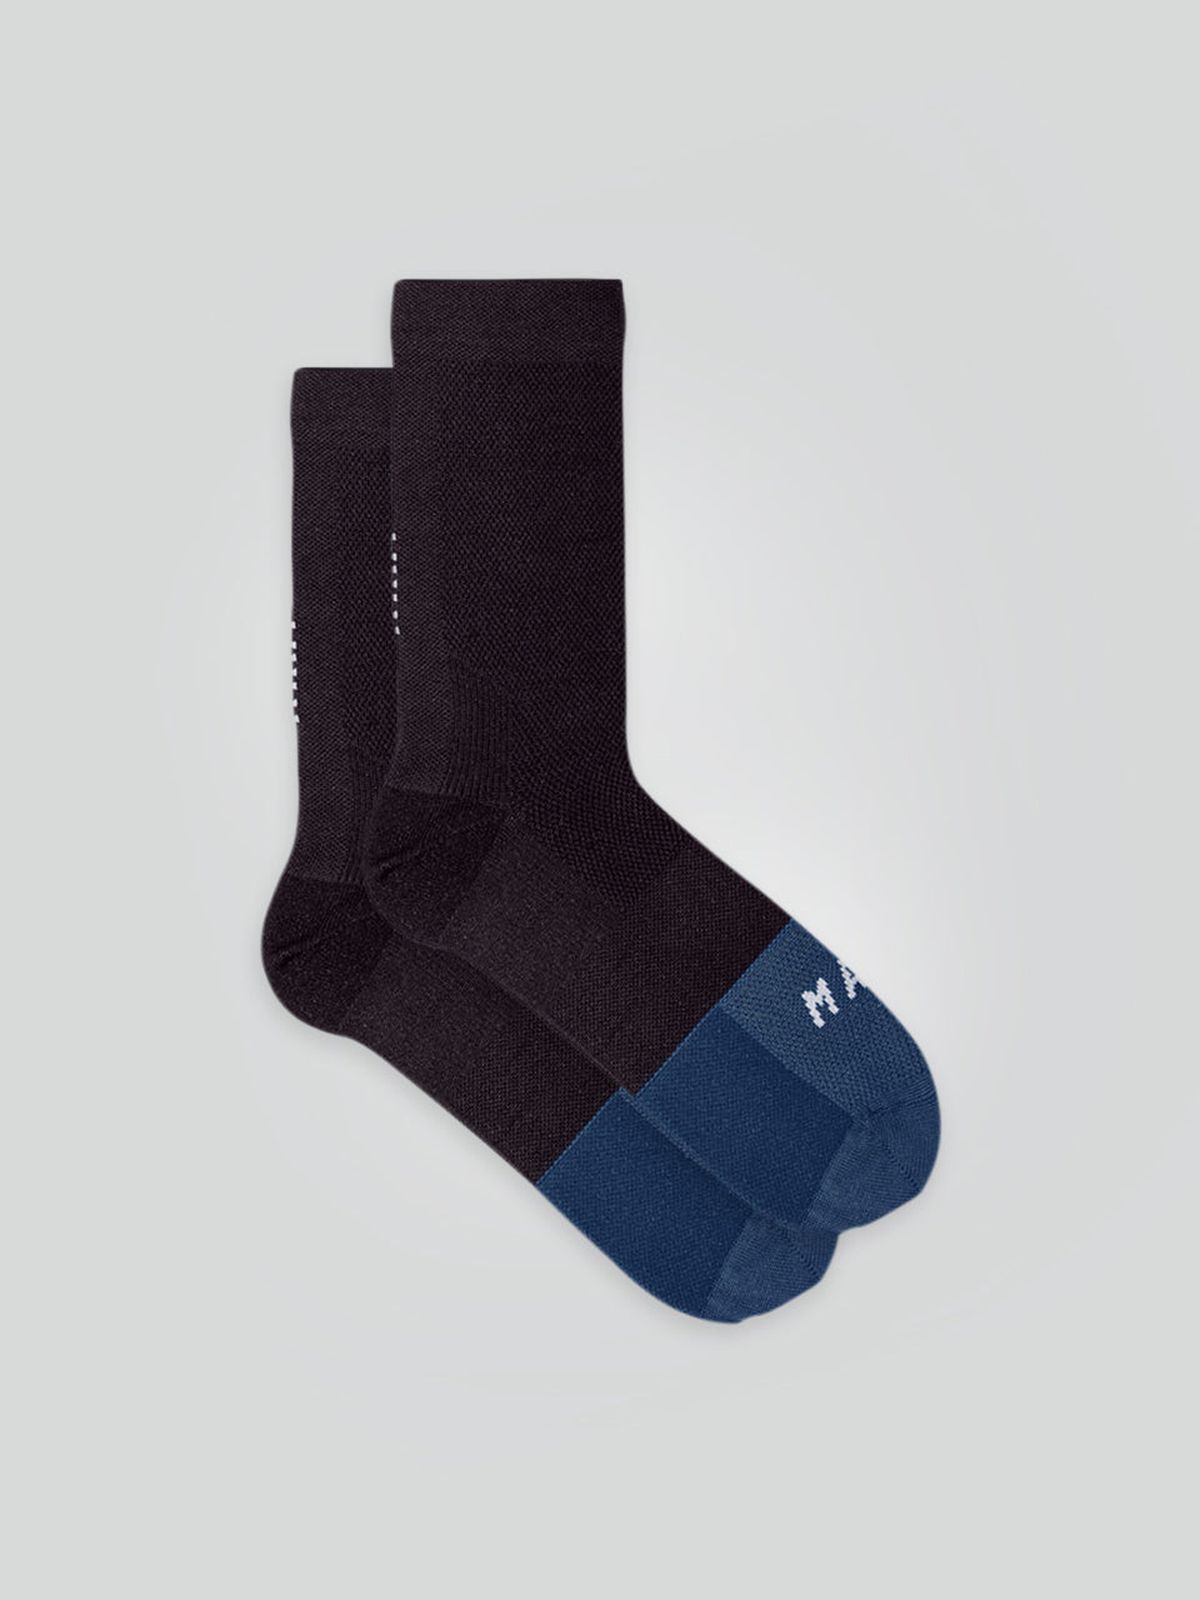 Division Sock (Black )